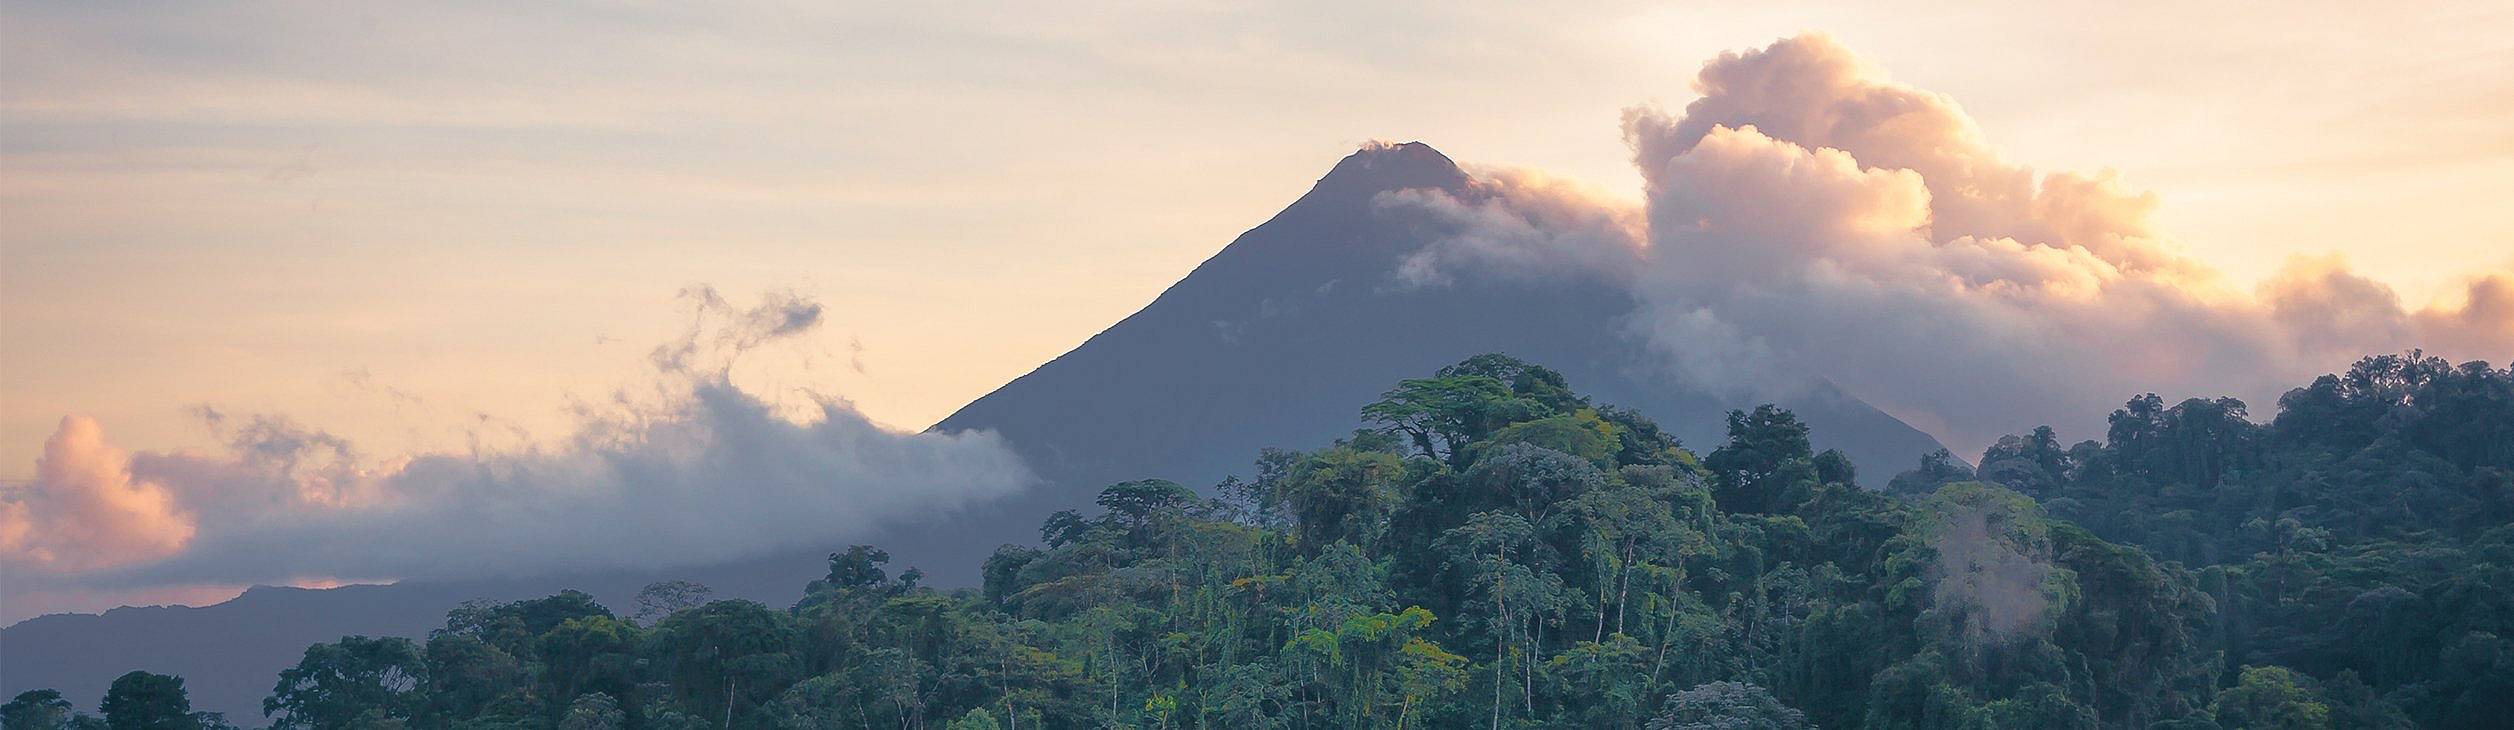 Votre voyage au Costa Rica en août 100% sur mesure